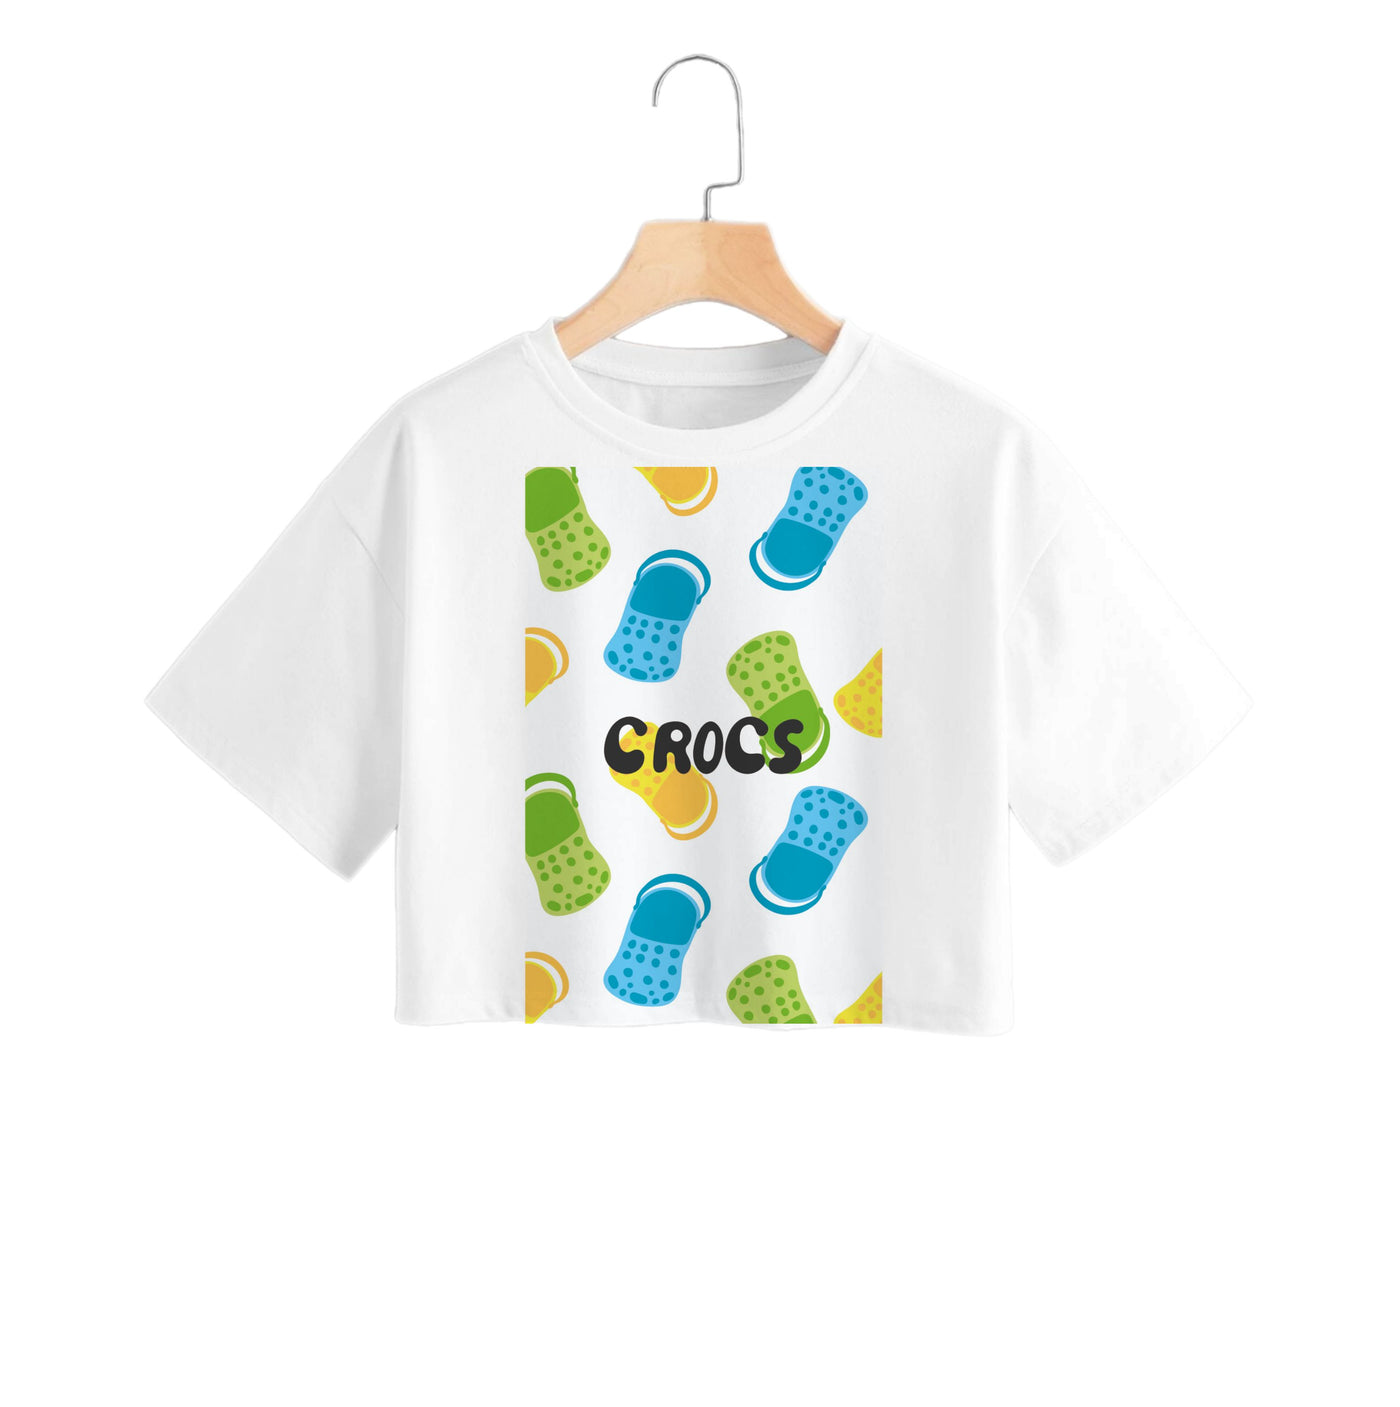 Crocs Pattern Crop Top